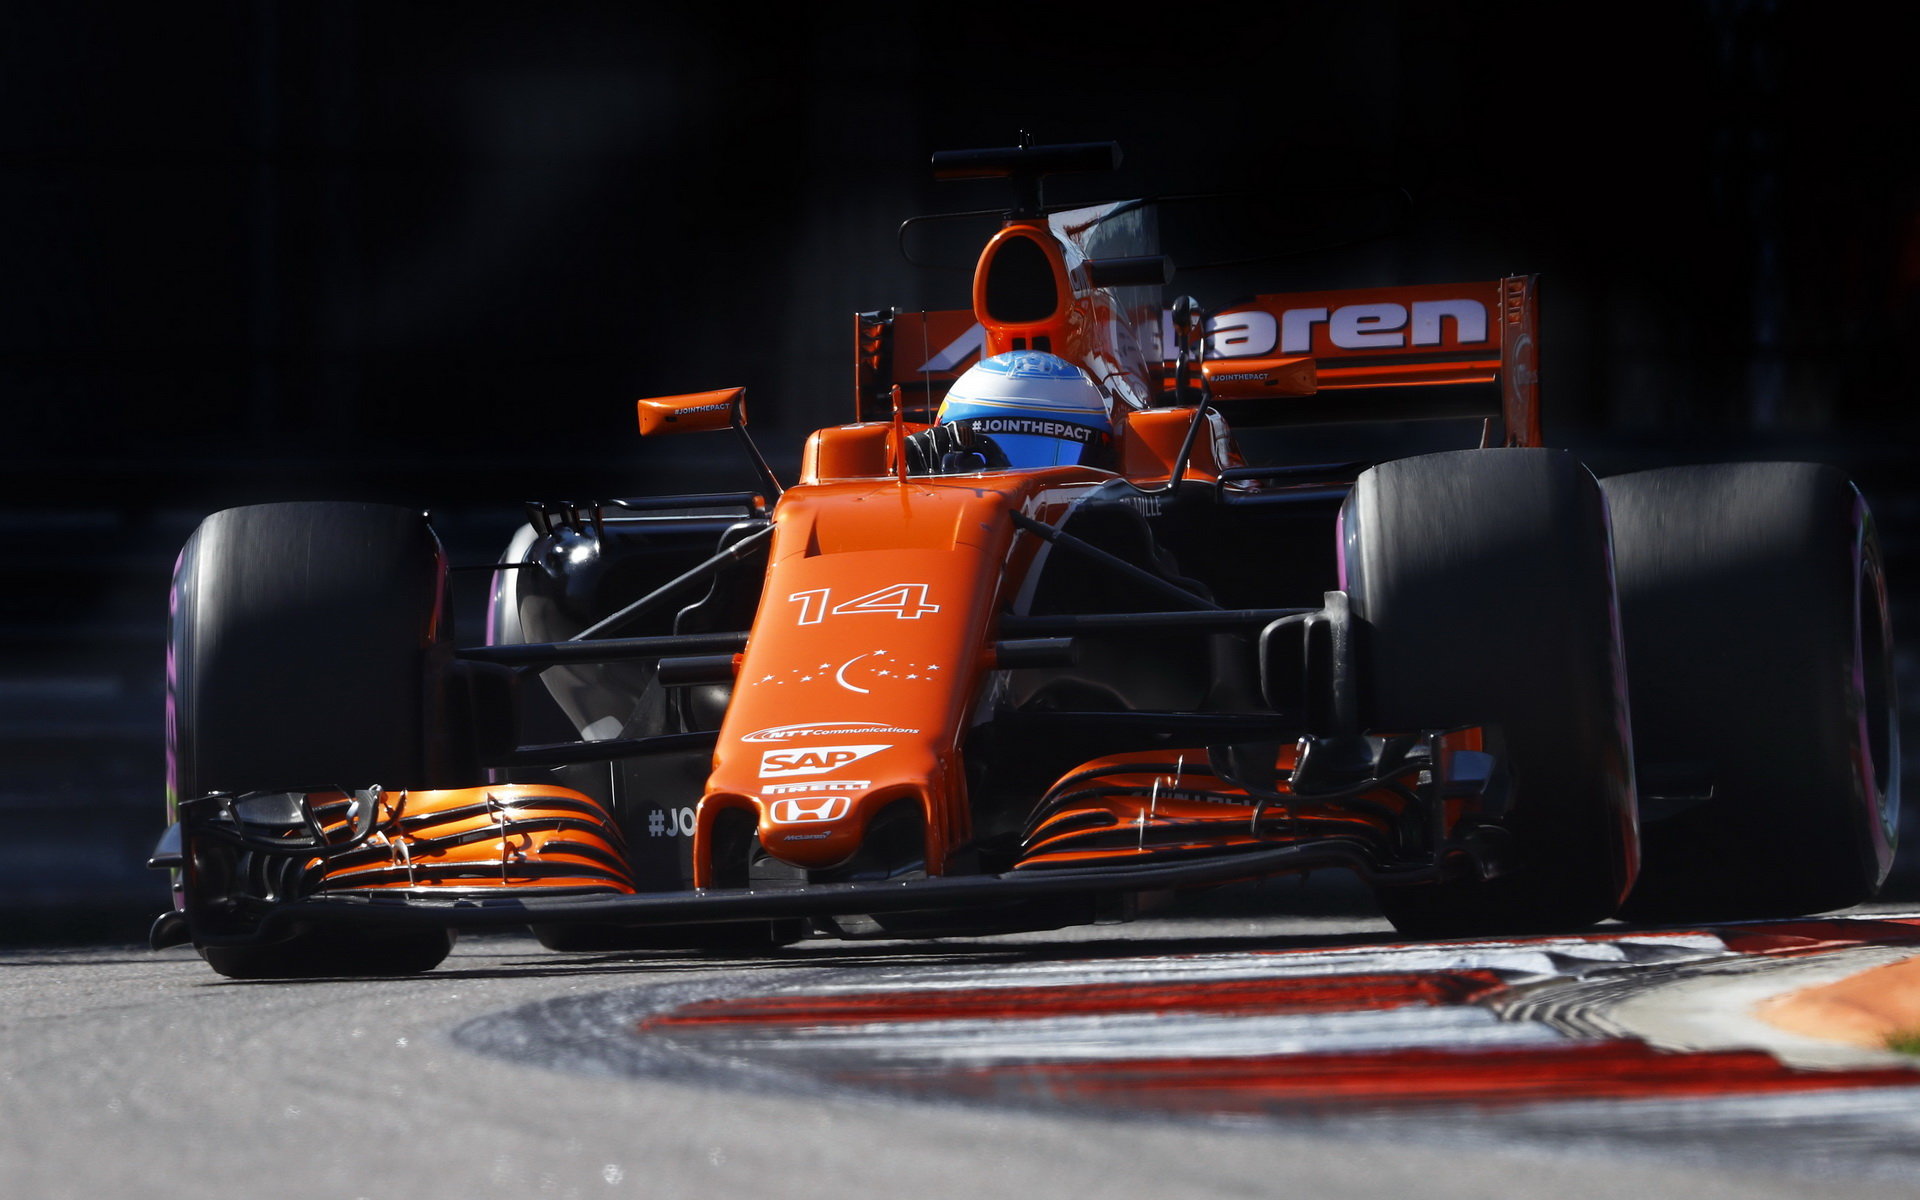 Fernando Alonso v kvalifikaci na Velkou cenu Ruska